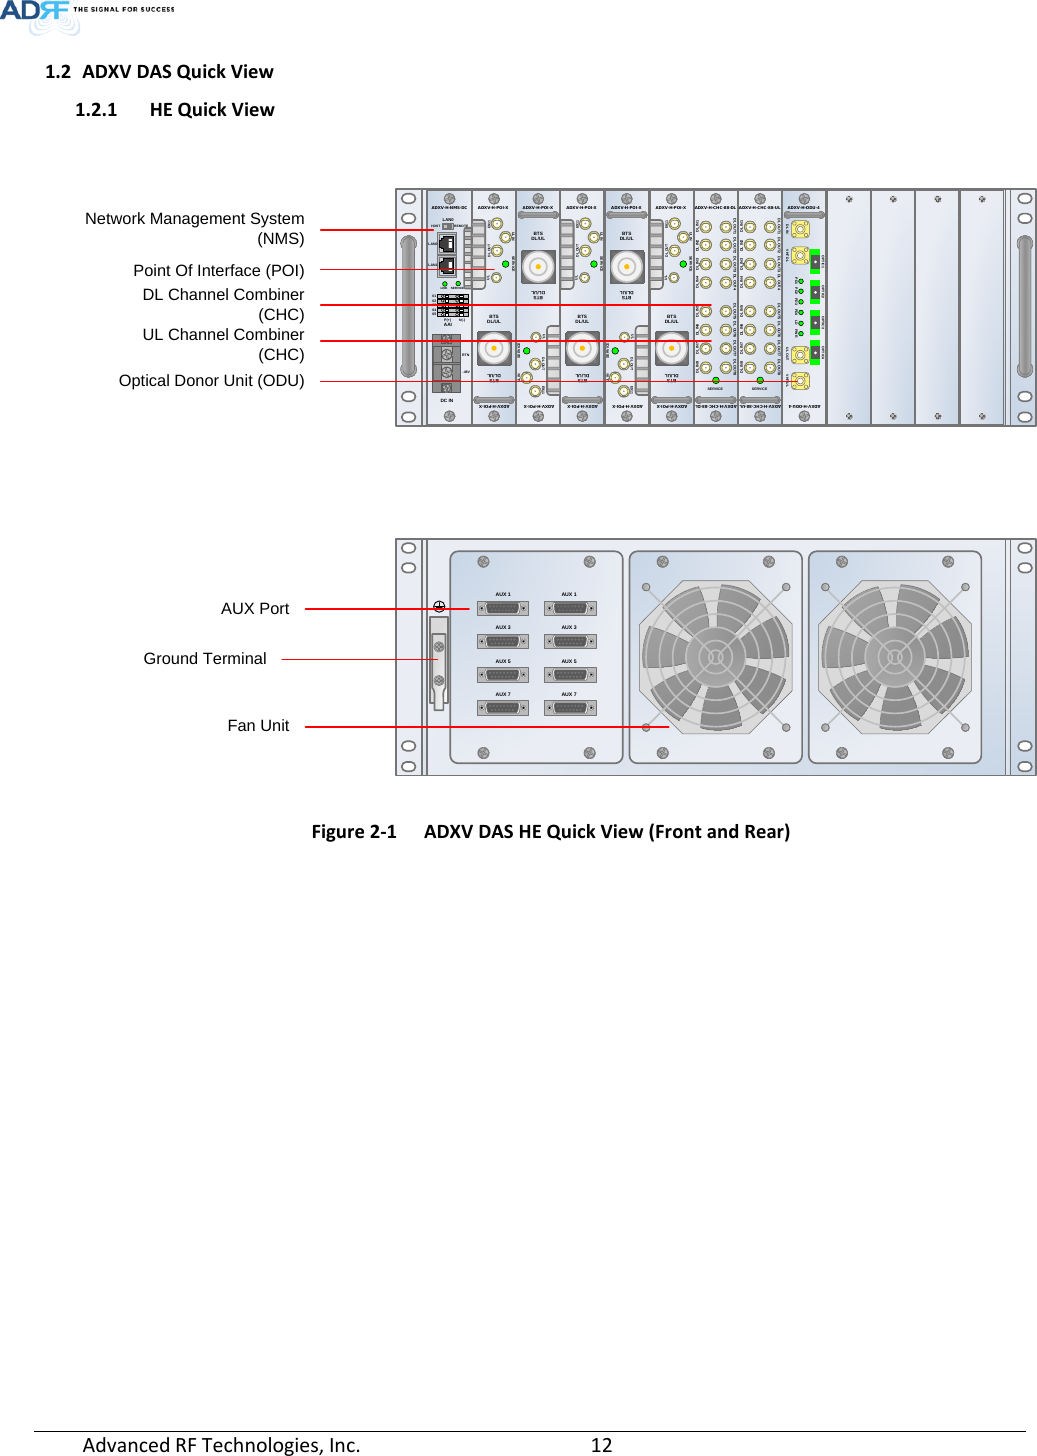 Page 12 of ADRF KOREA ADXV-R-336 DAS (Distributed Antenna System) User Manual ADXV DAS